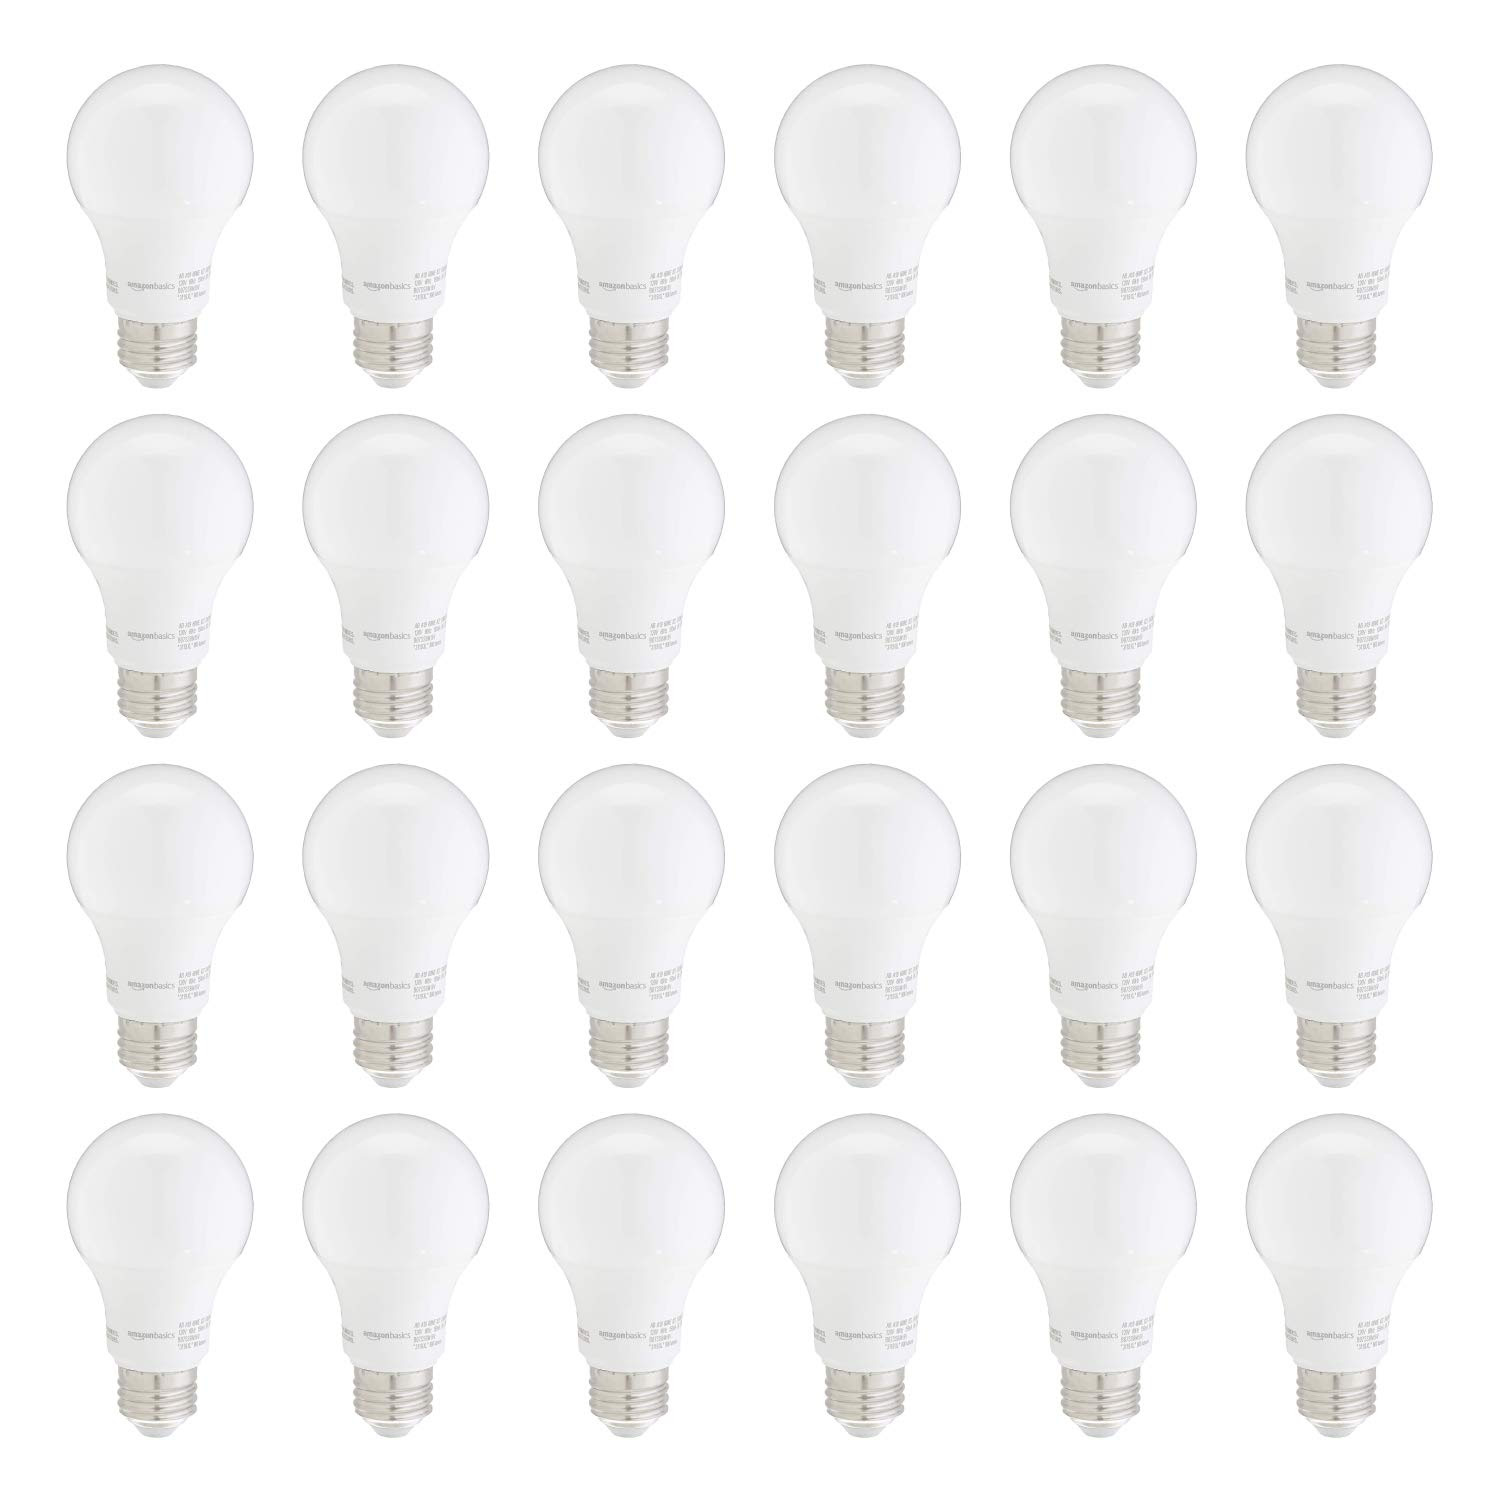 Amazon Basics LED Light Bulbs